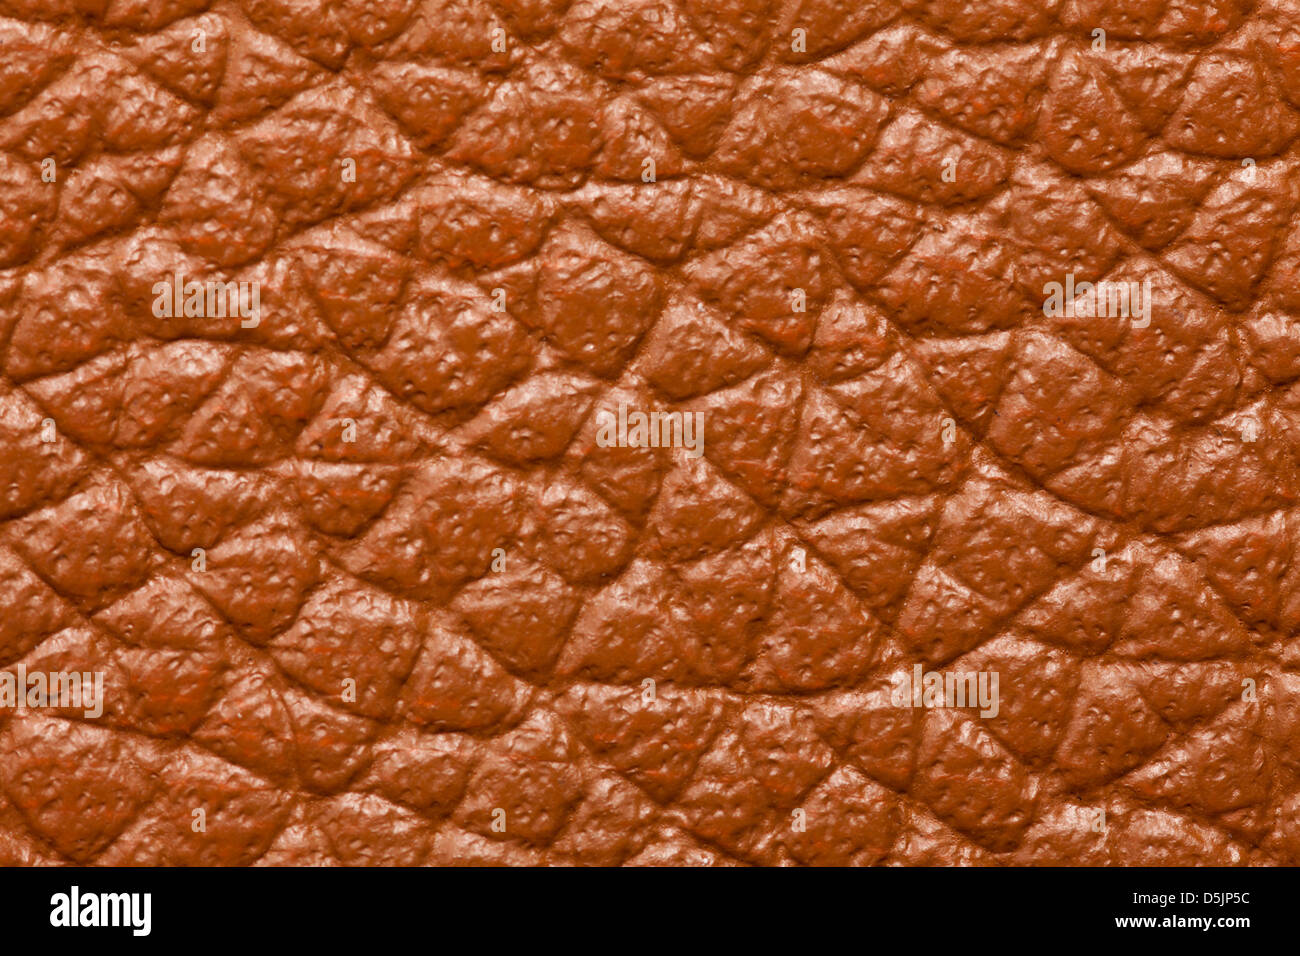 Fond en cuir brun clair ou libre de texture organique Banque D'Images